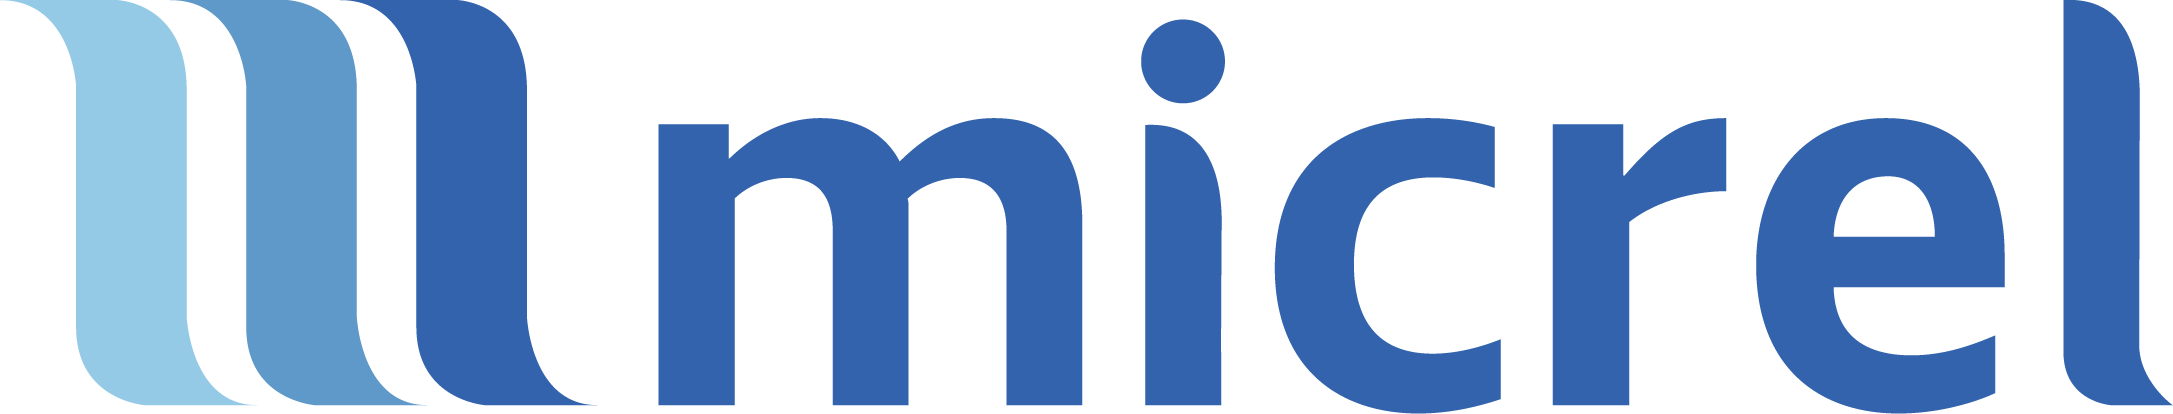 Micrel E-learning Website | Impostare nuova password logo